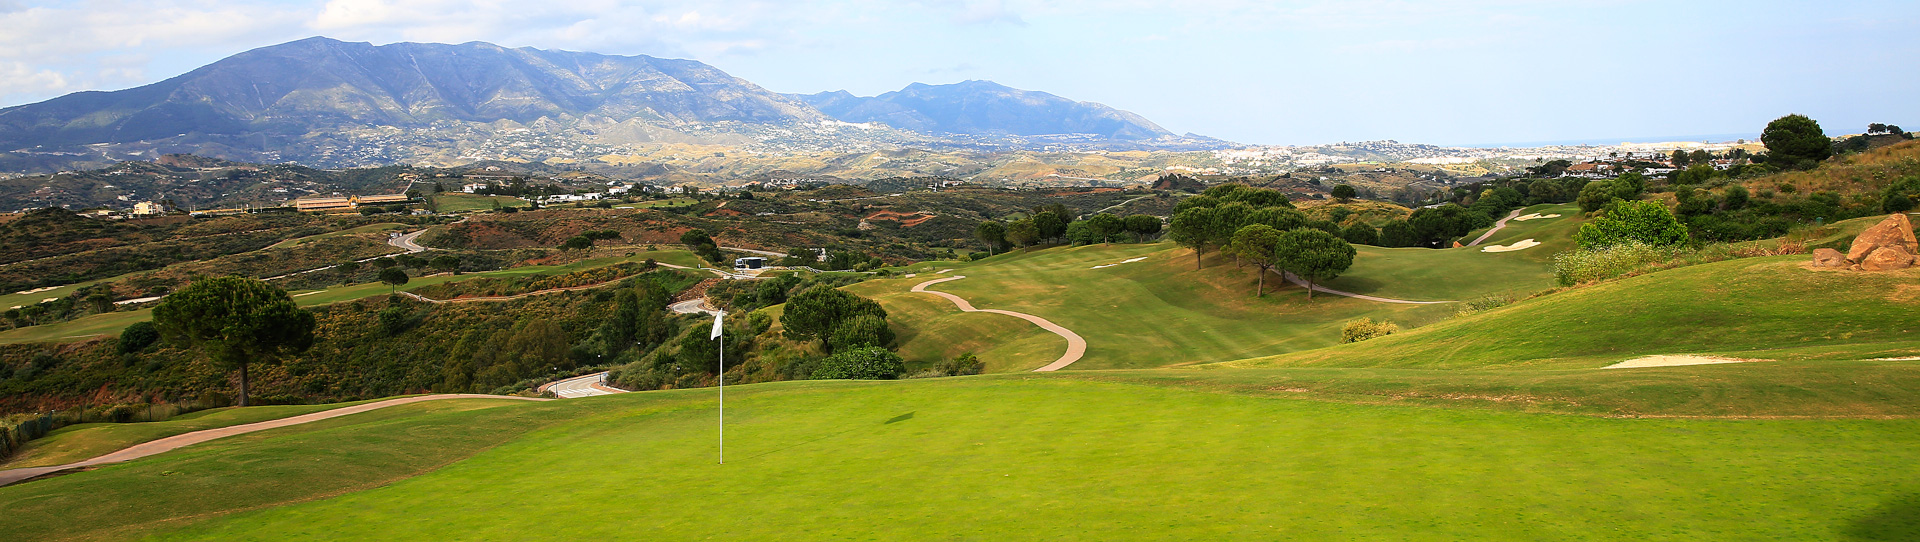 Spain golf holidays - La Cala Golf Passport - Photo 1